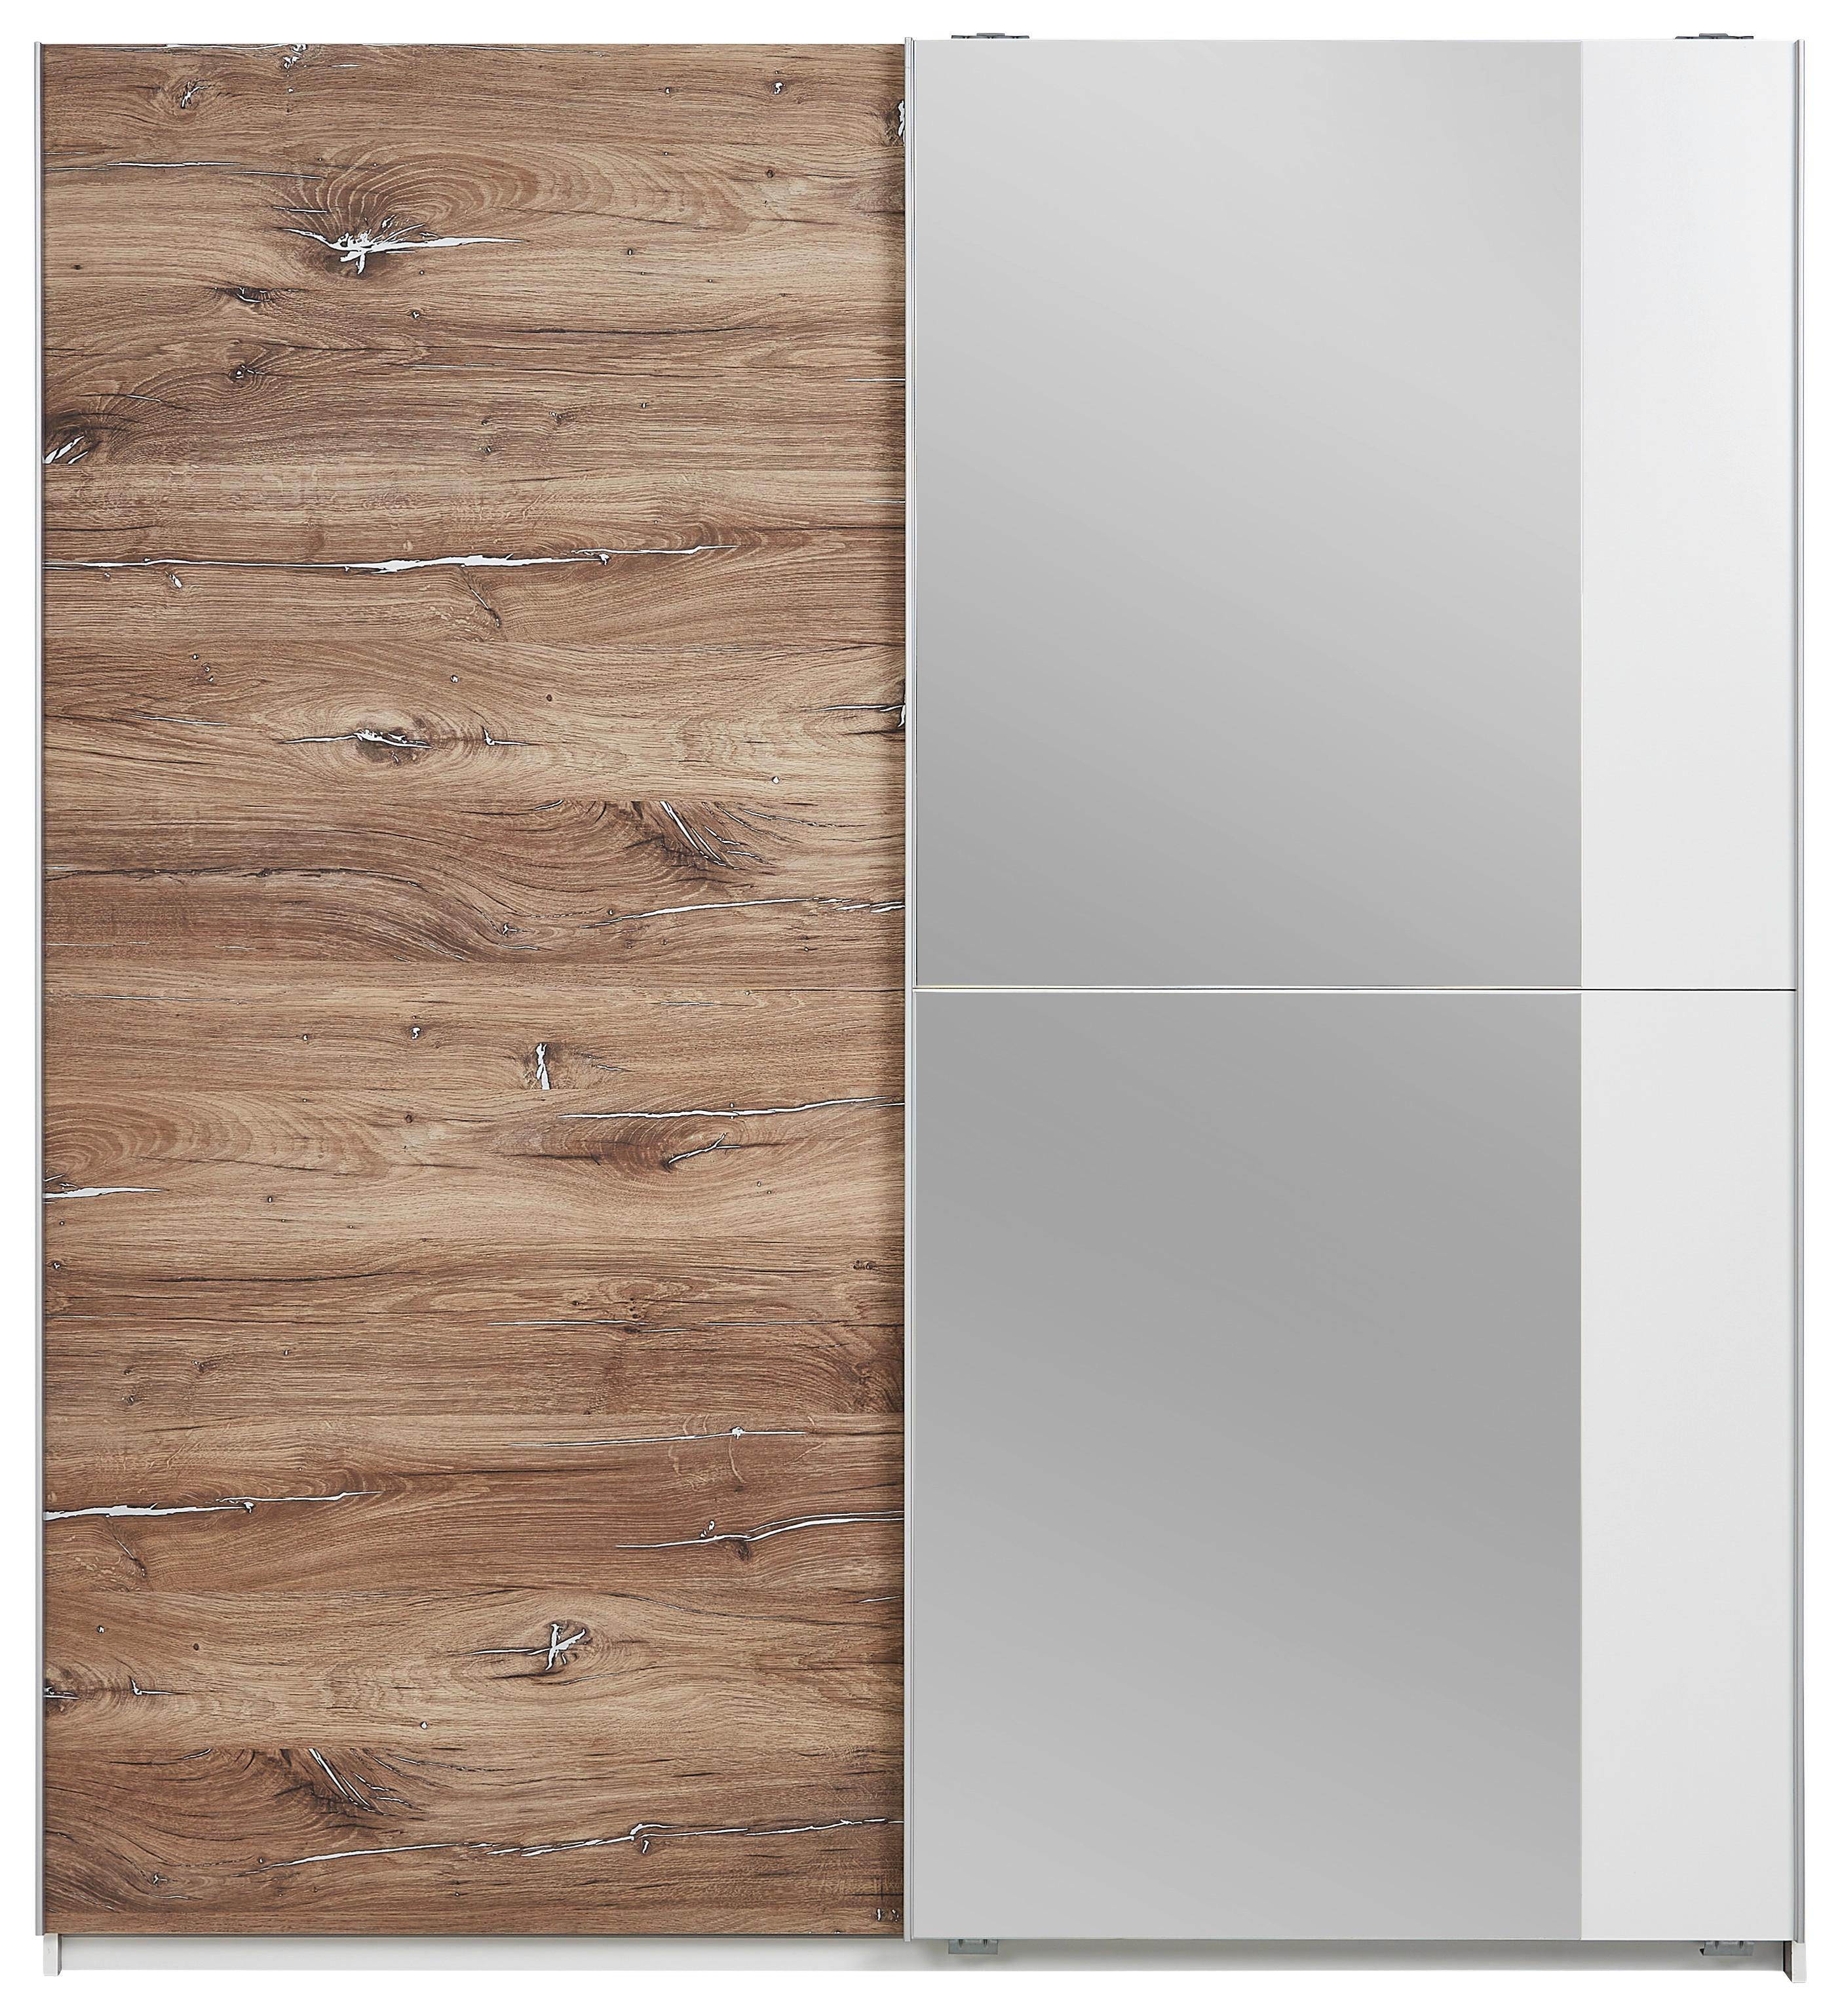 Skříň Se Zrcadlem Stripe Š. 180cm,bílá/dub Flagstaff - bílá/barvy dubu, Konvenční, kov/kompozitní dřevo (180/198/65cm)